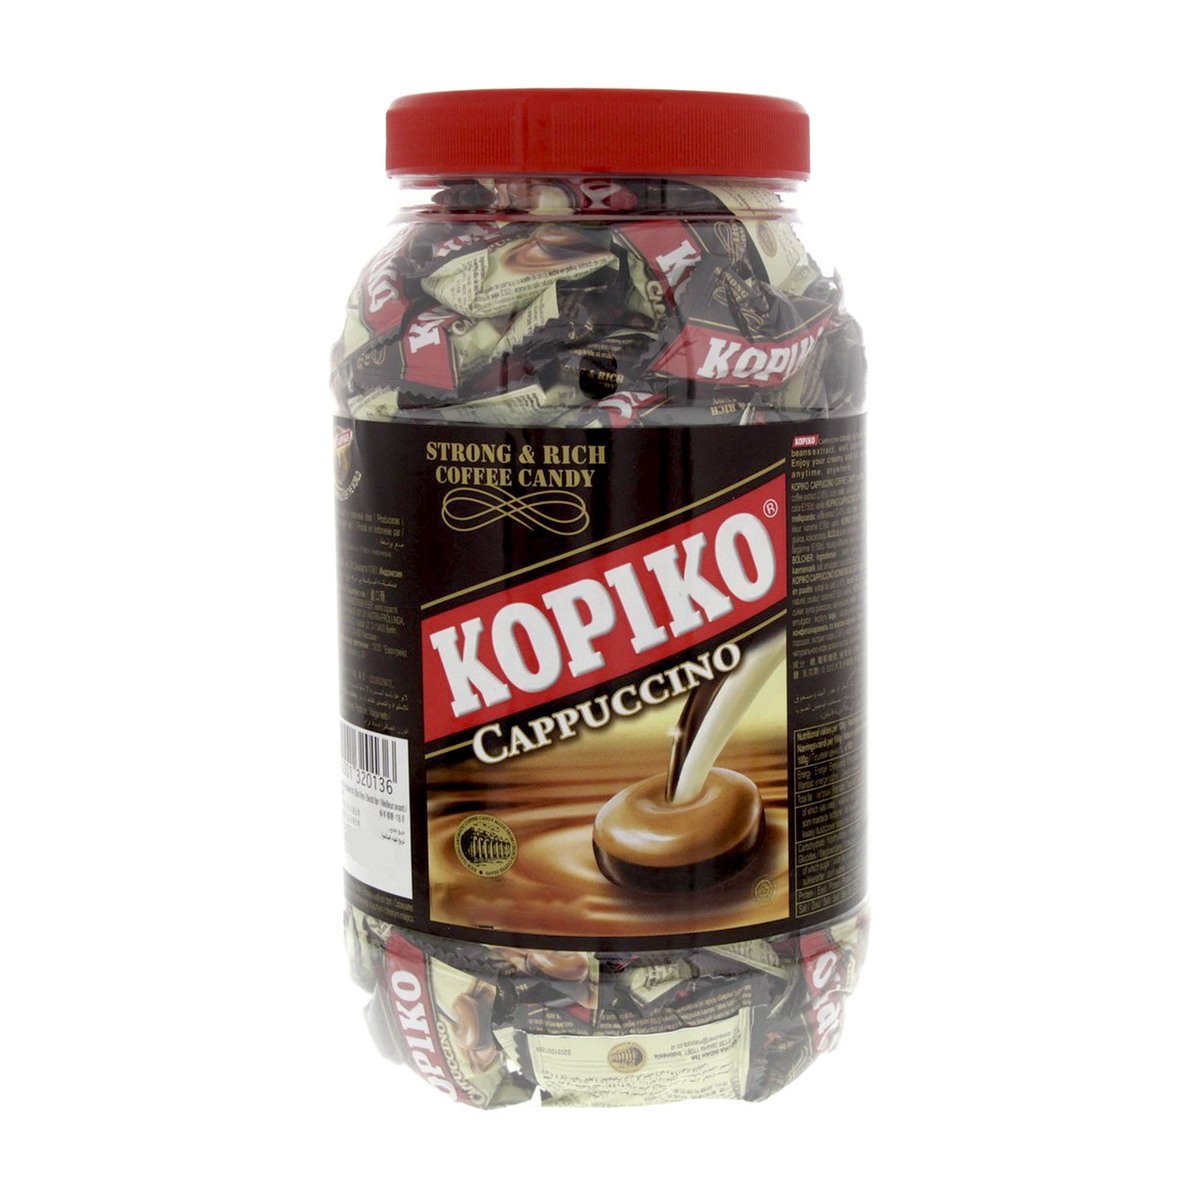 Kopiko Cappuccino Coffee Candy 700 g